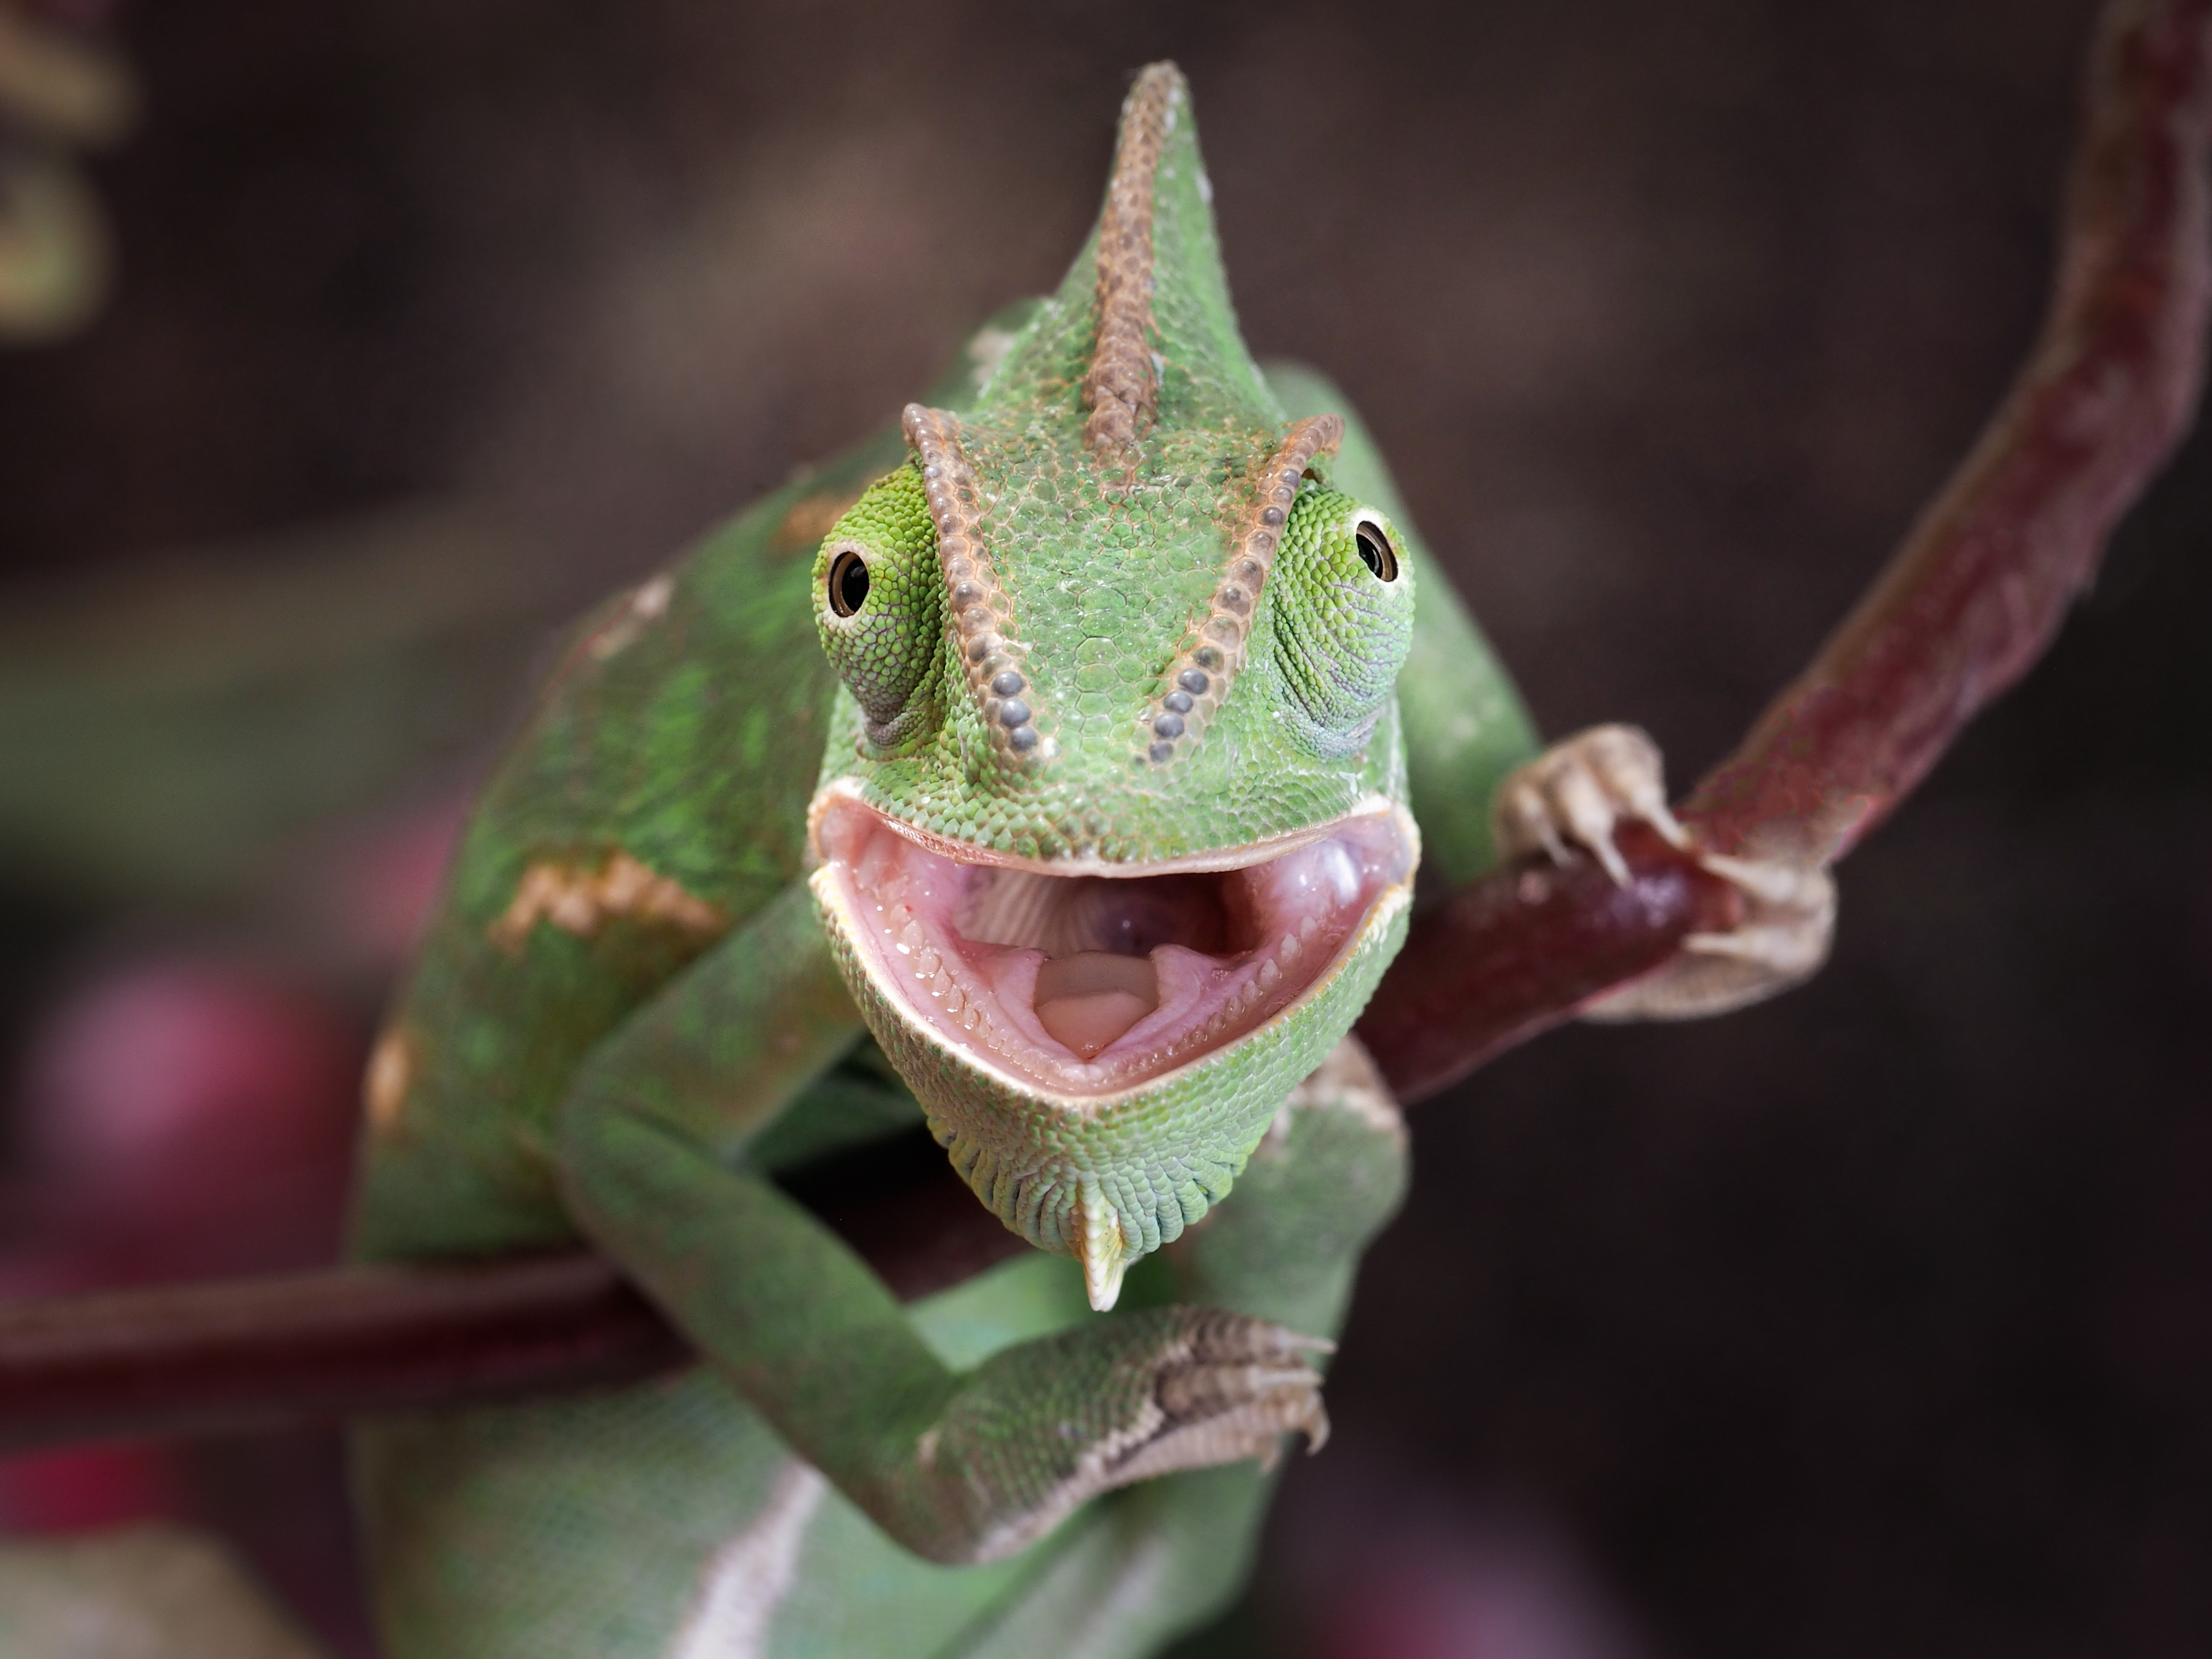 How Long Do Lizards Live? Reptile Lifespan Explained